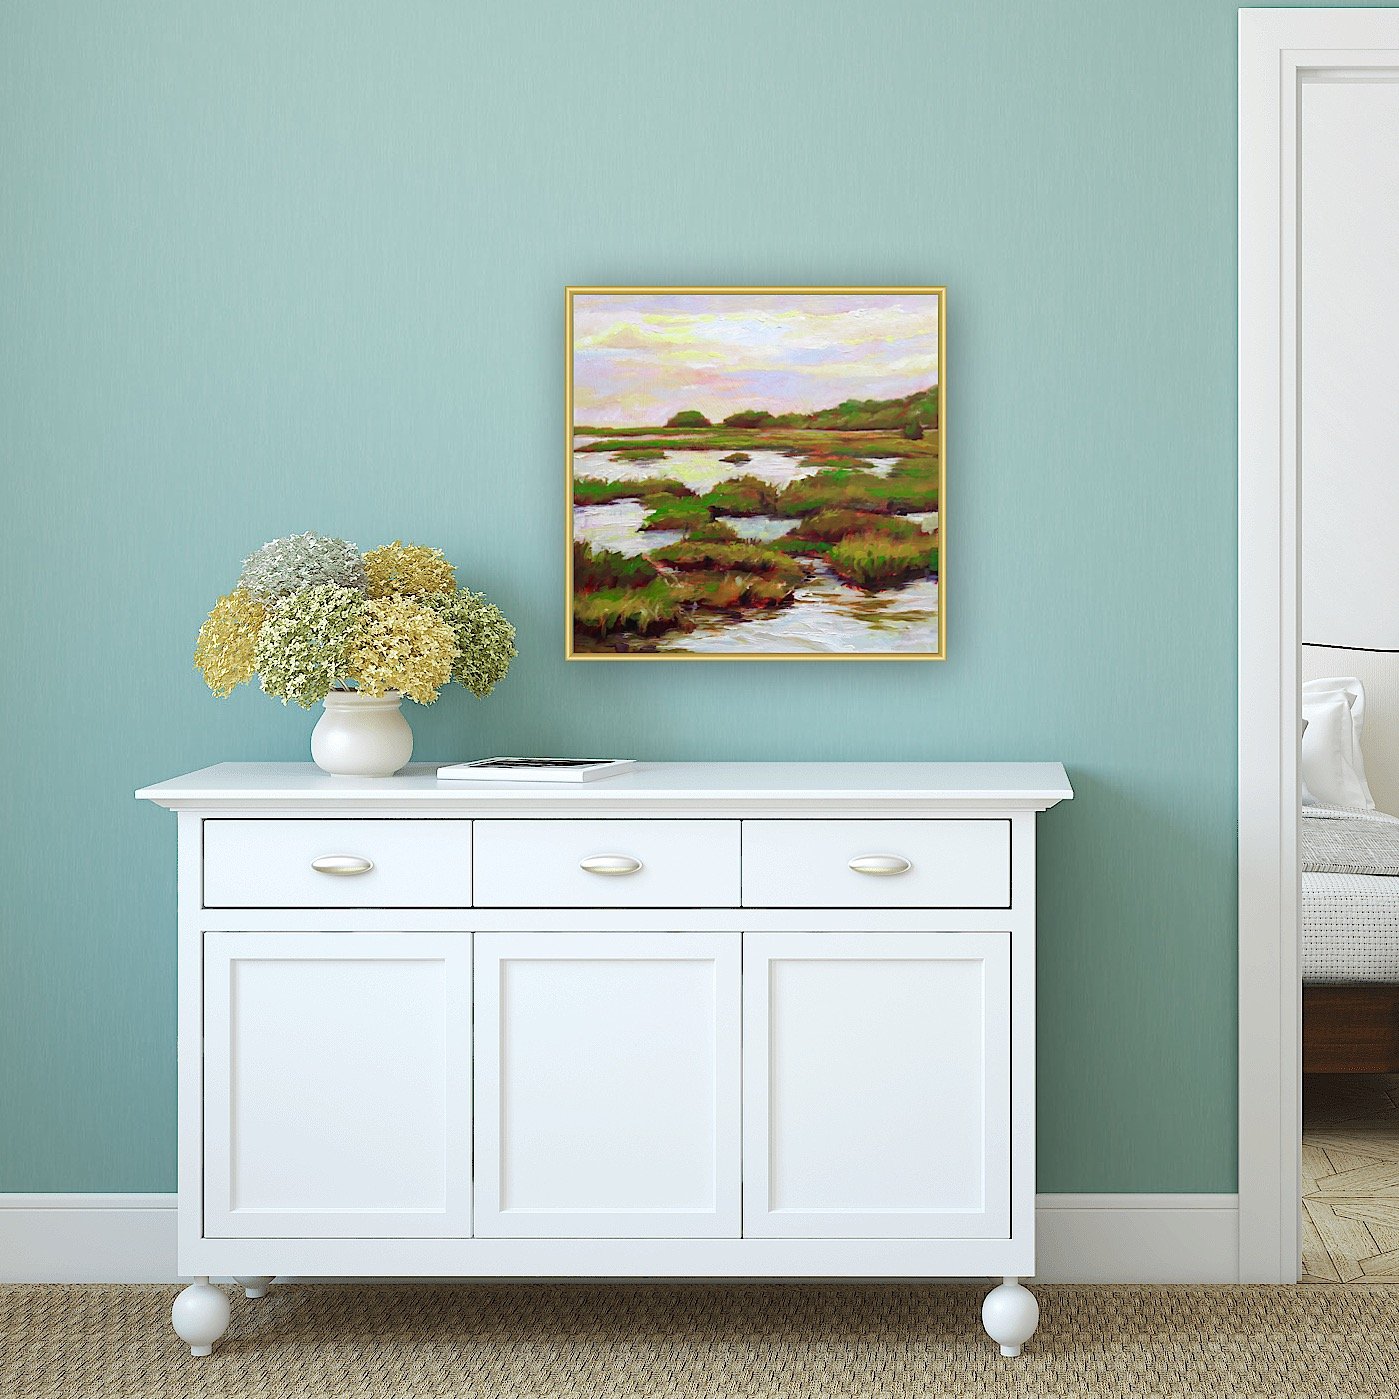 Small-marsh-painting-KatiePodracky-art-print-colorful-coastal-serene-relaxing-art.JPG